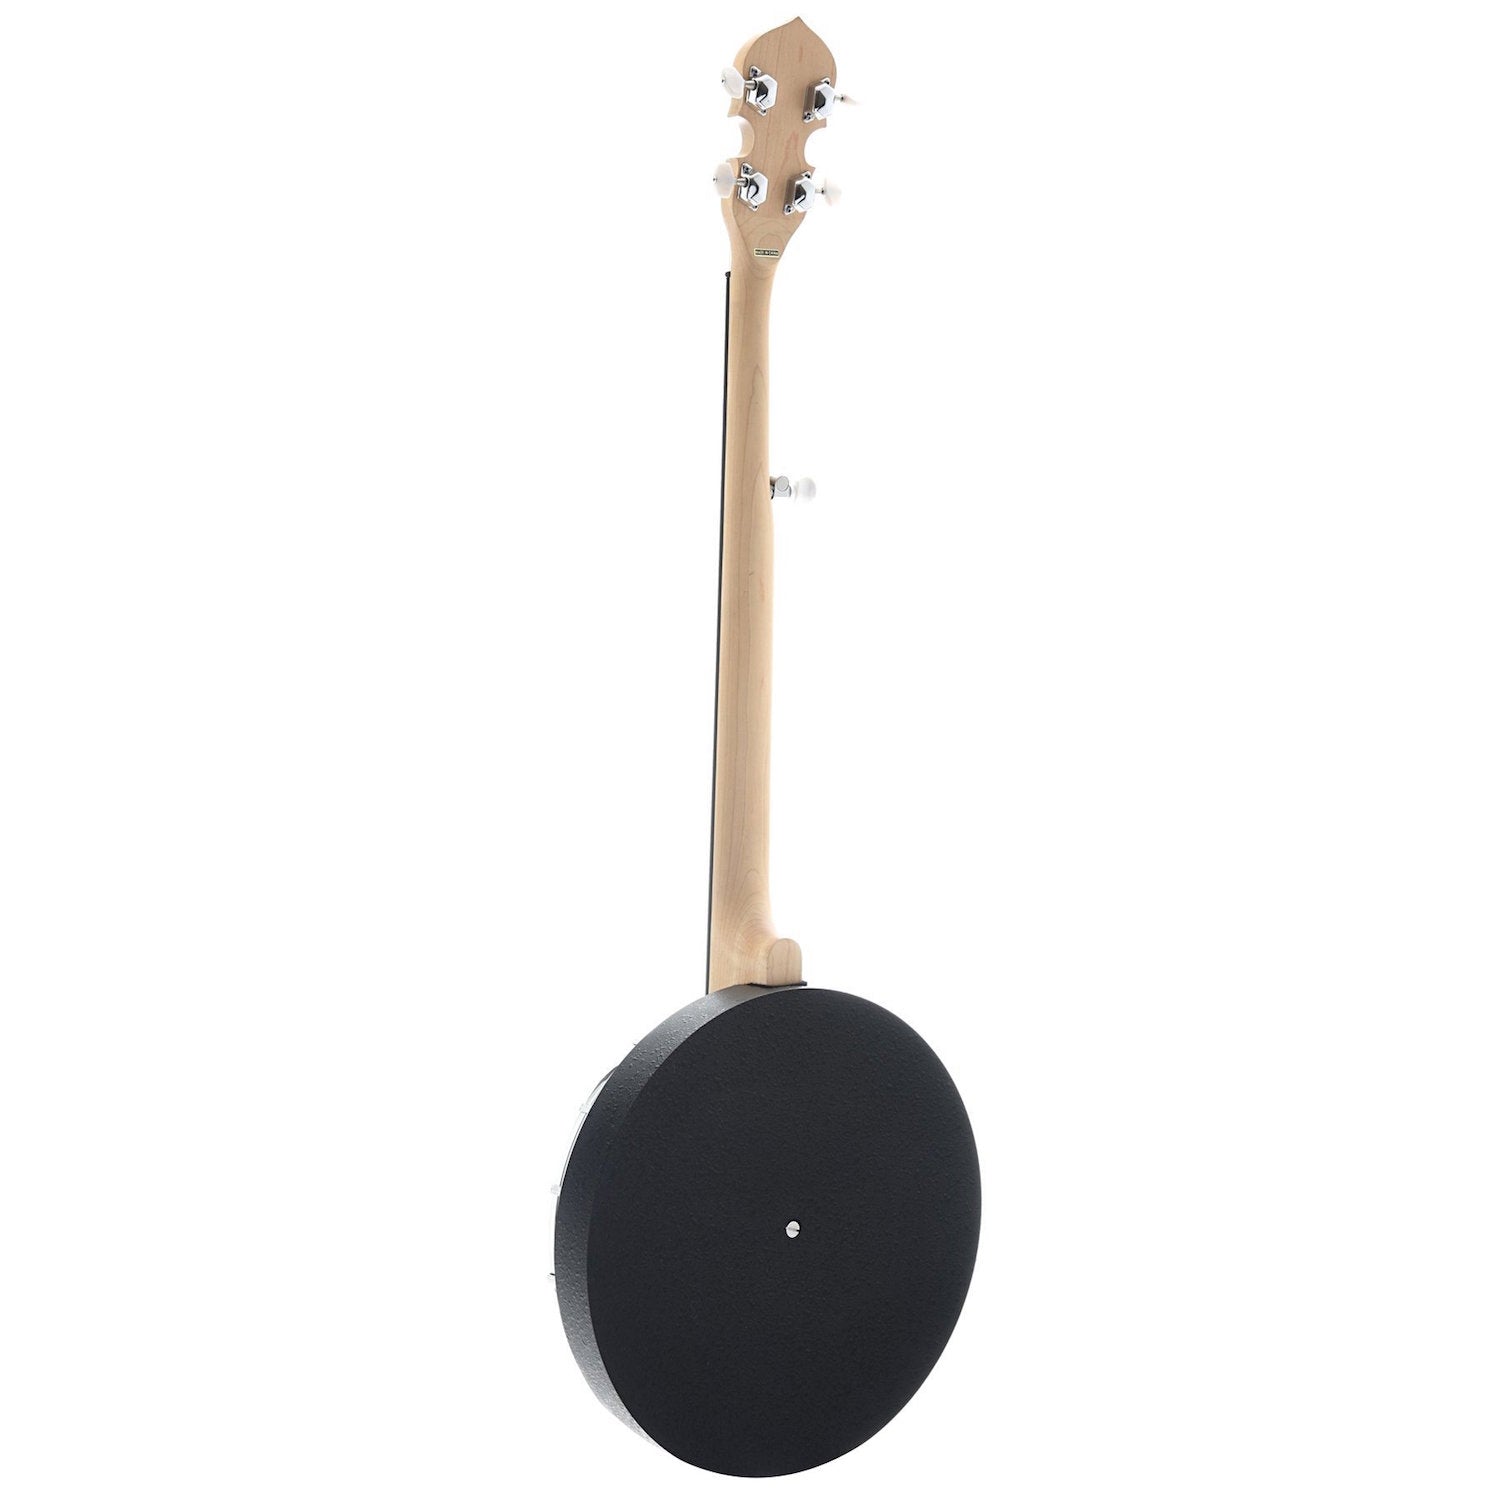 Gold Tone AC-5 Composite Series Resonator Banjo with bag